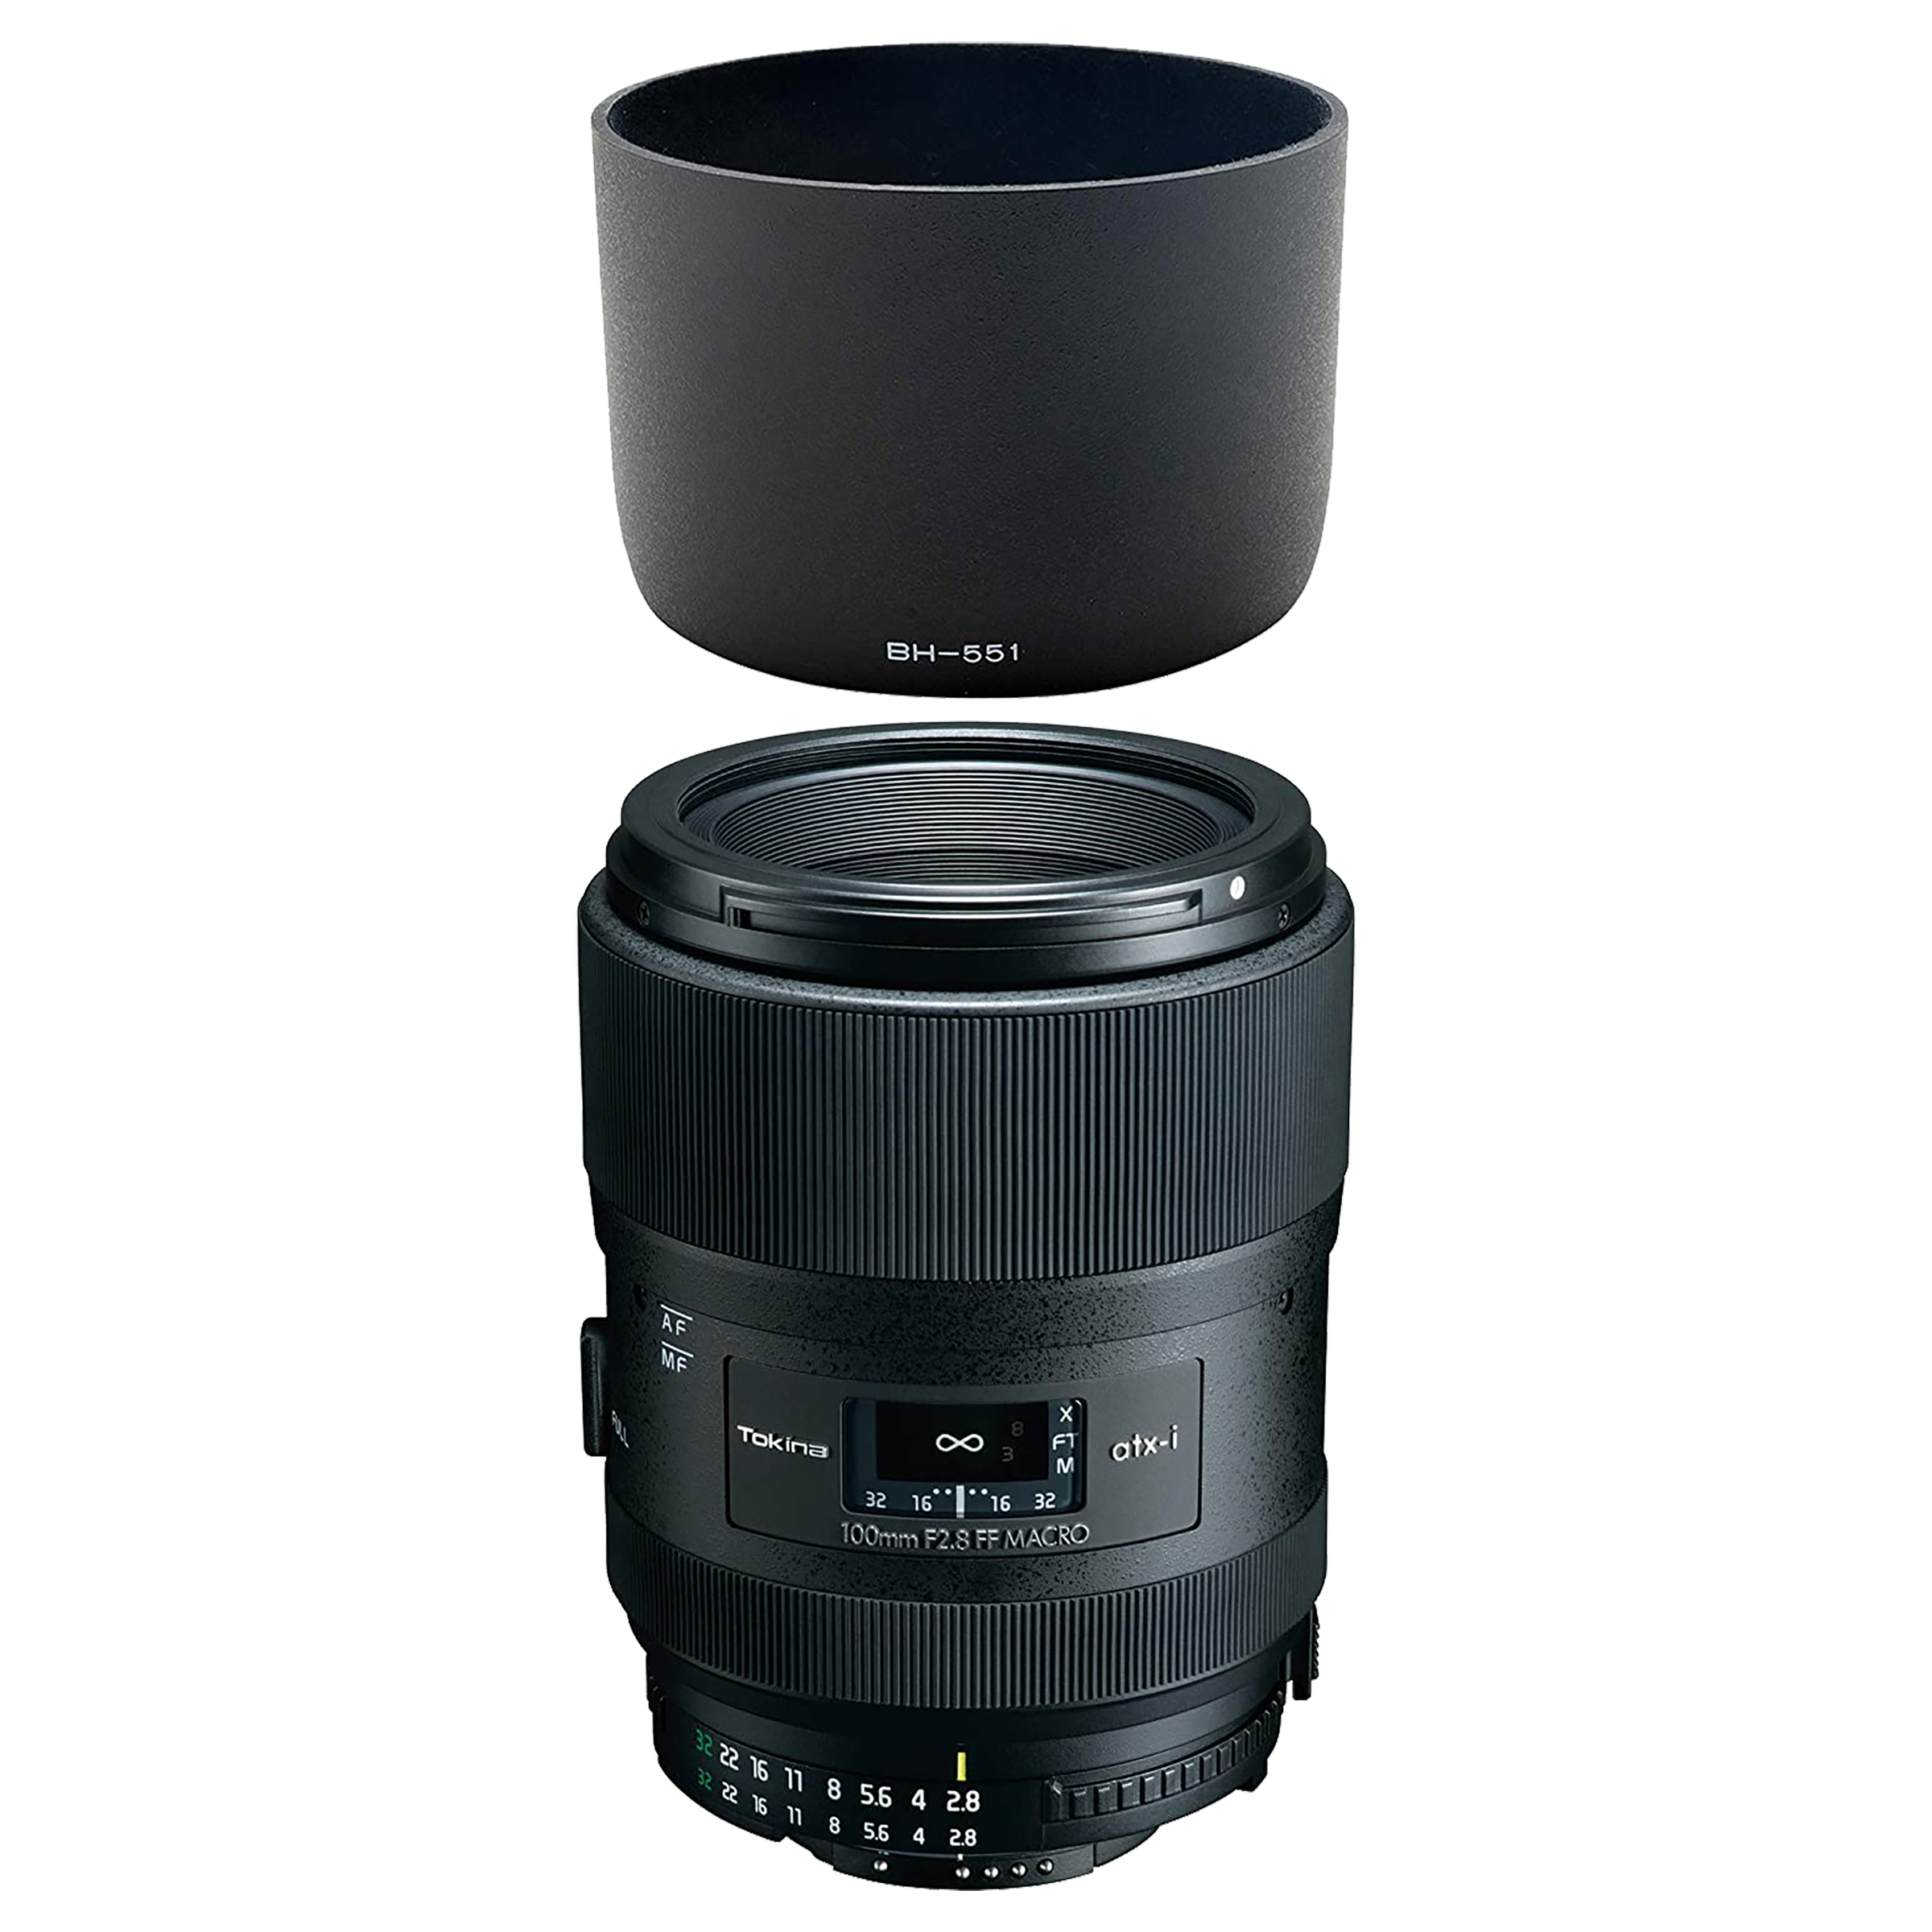 Tokina Atx-i 100 mm Max-f/2.8 And Min-f/32 Macro Lens (Extending Barrel Focusing System, 11D2662U01, Black)